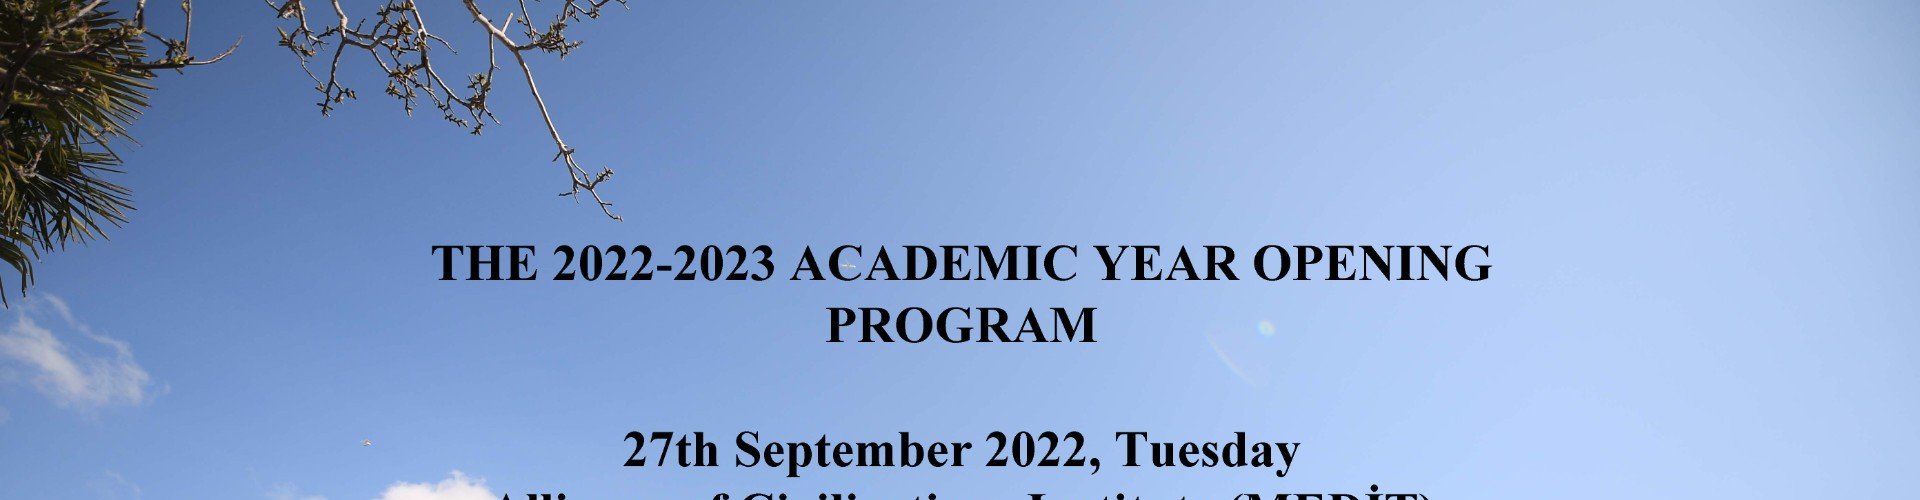 THE 2022-2023 ACADEMIC YEAR OPENING PROGRAM